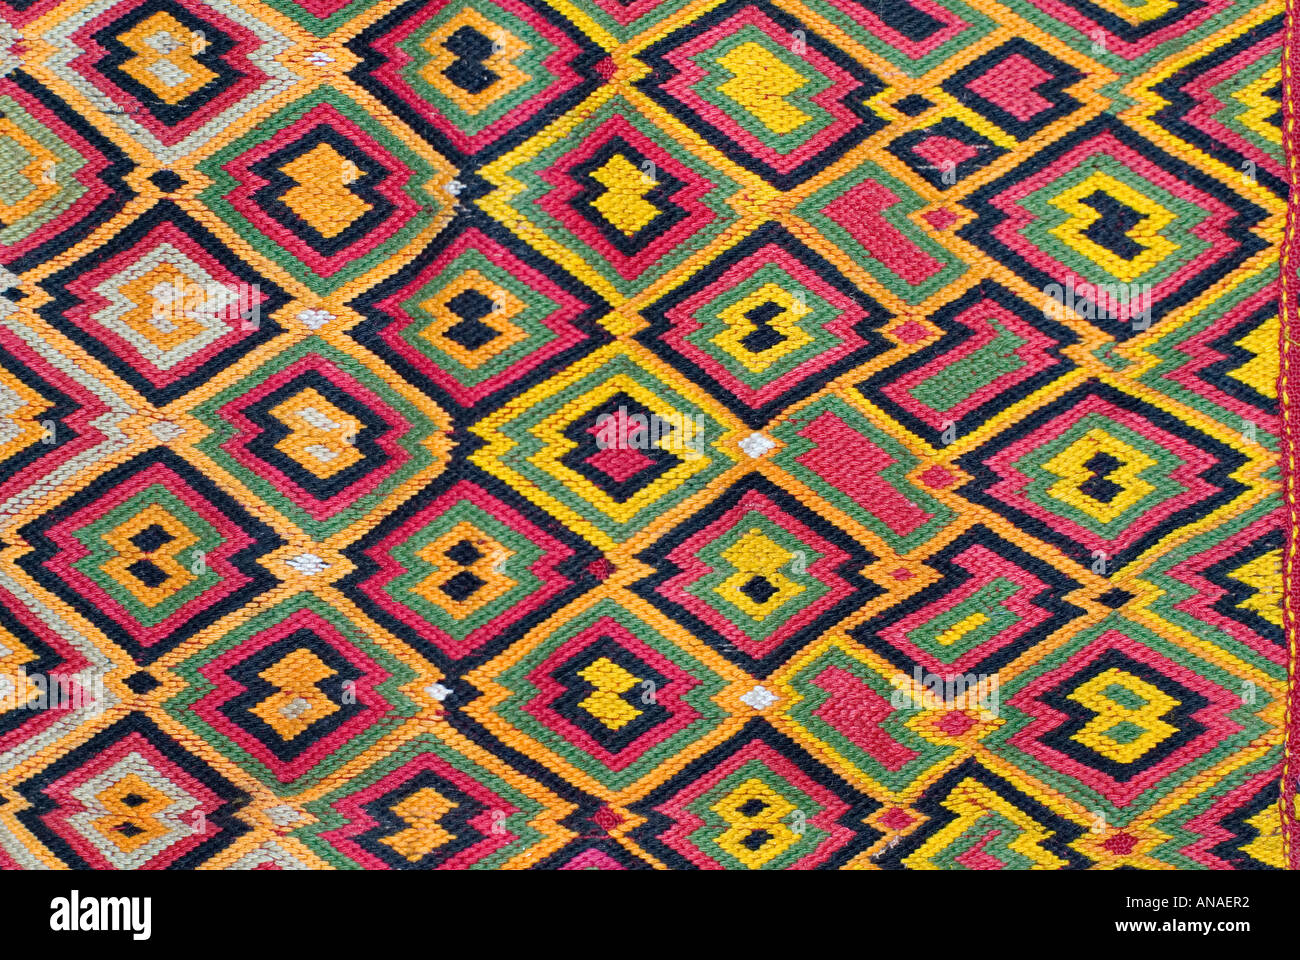 Embroidered Banjara textile with eye dazzling geometric patterning Jabalpur District Madhya Pradesh India Stock Photo